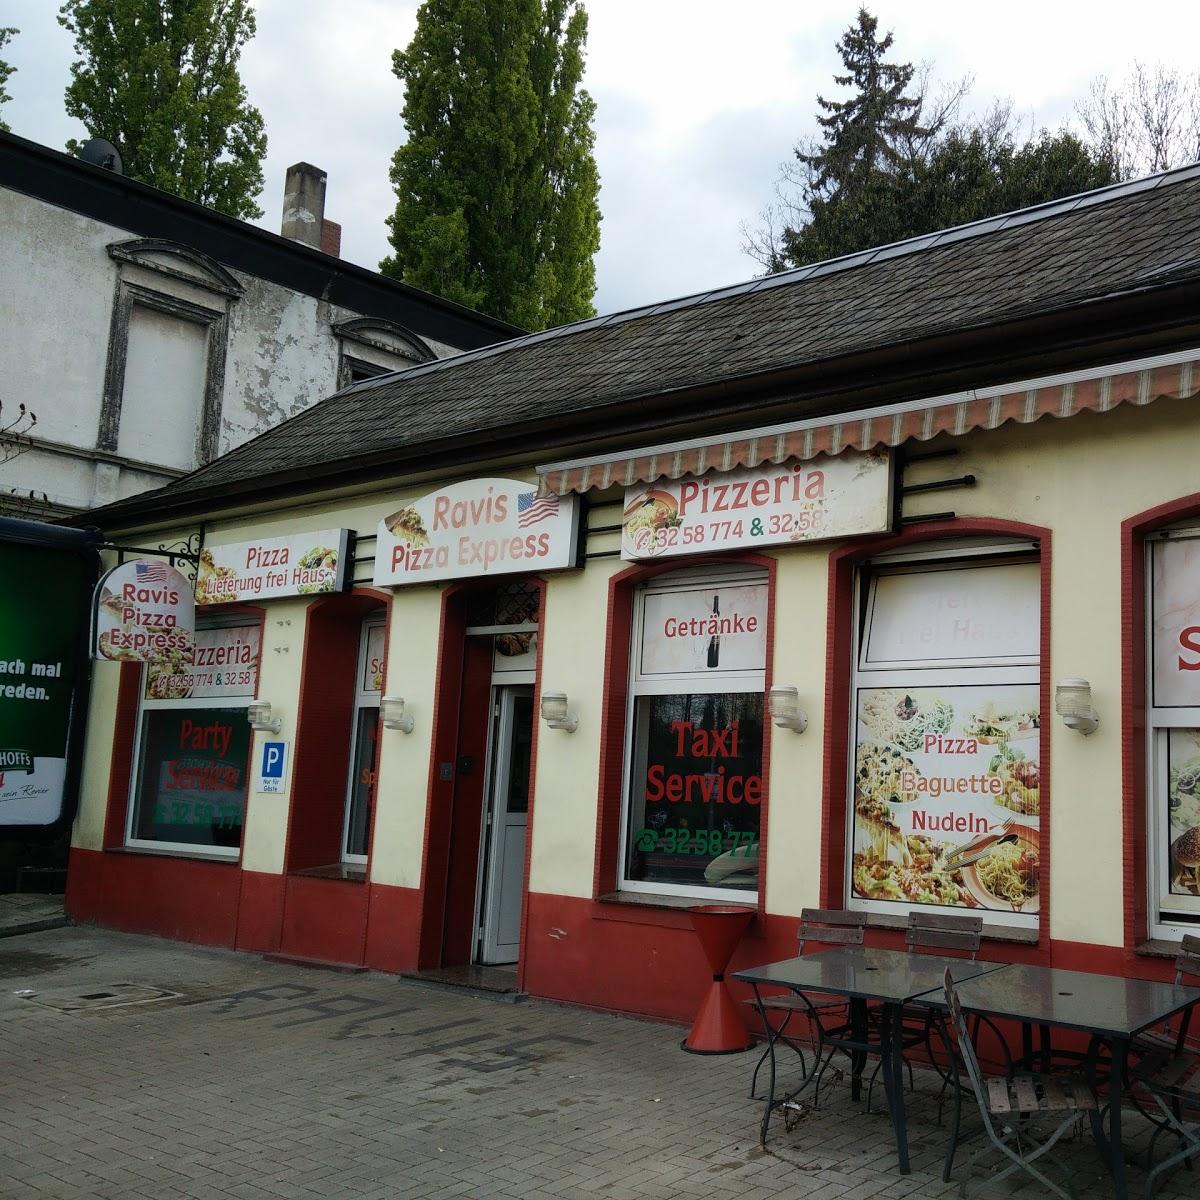 Restaurant "Ravis Pizza Express" in Bochum